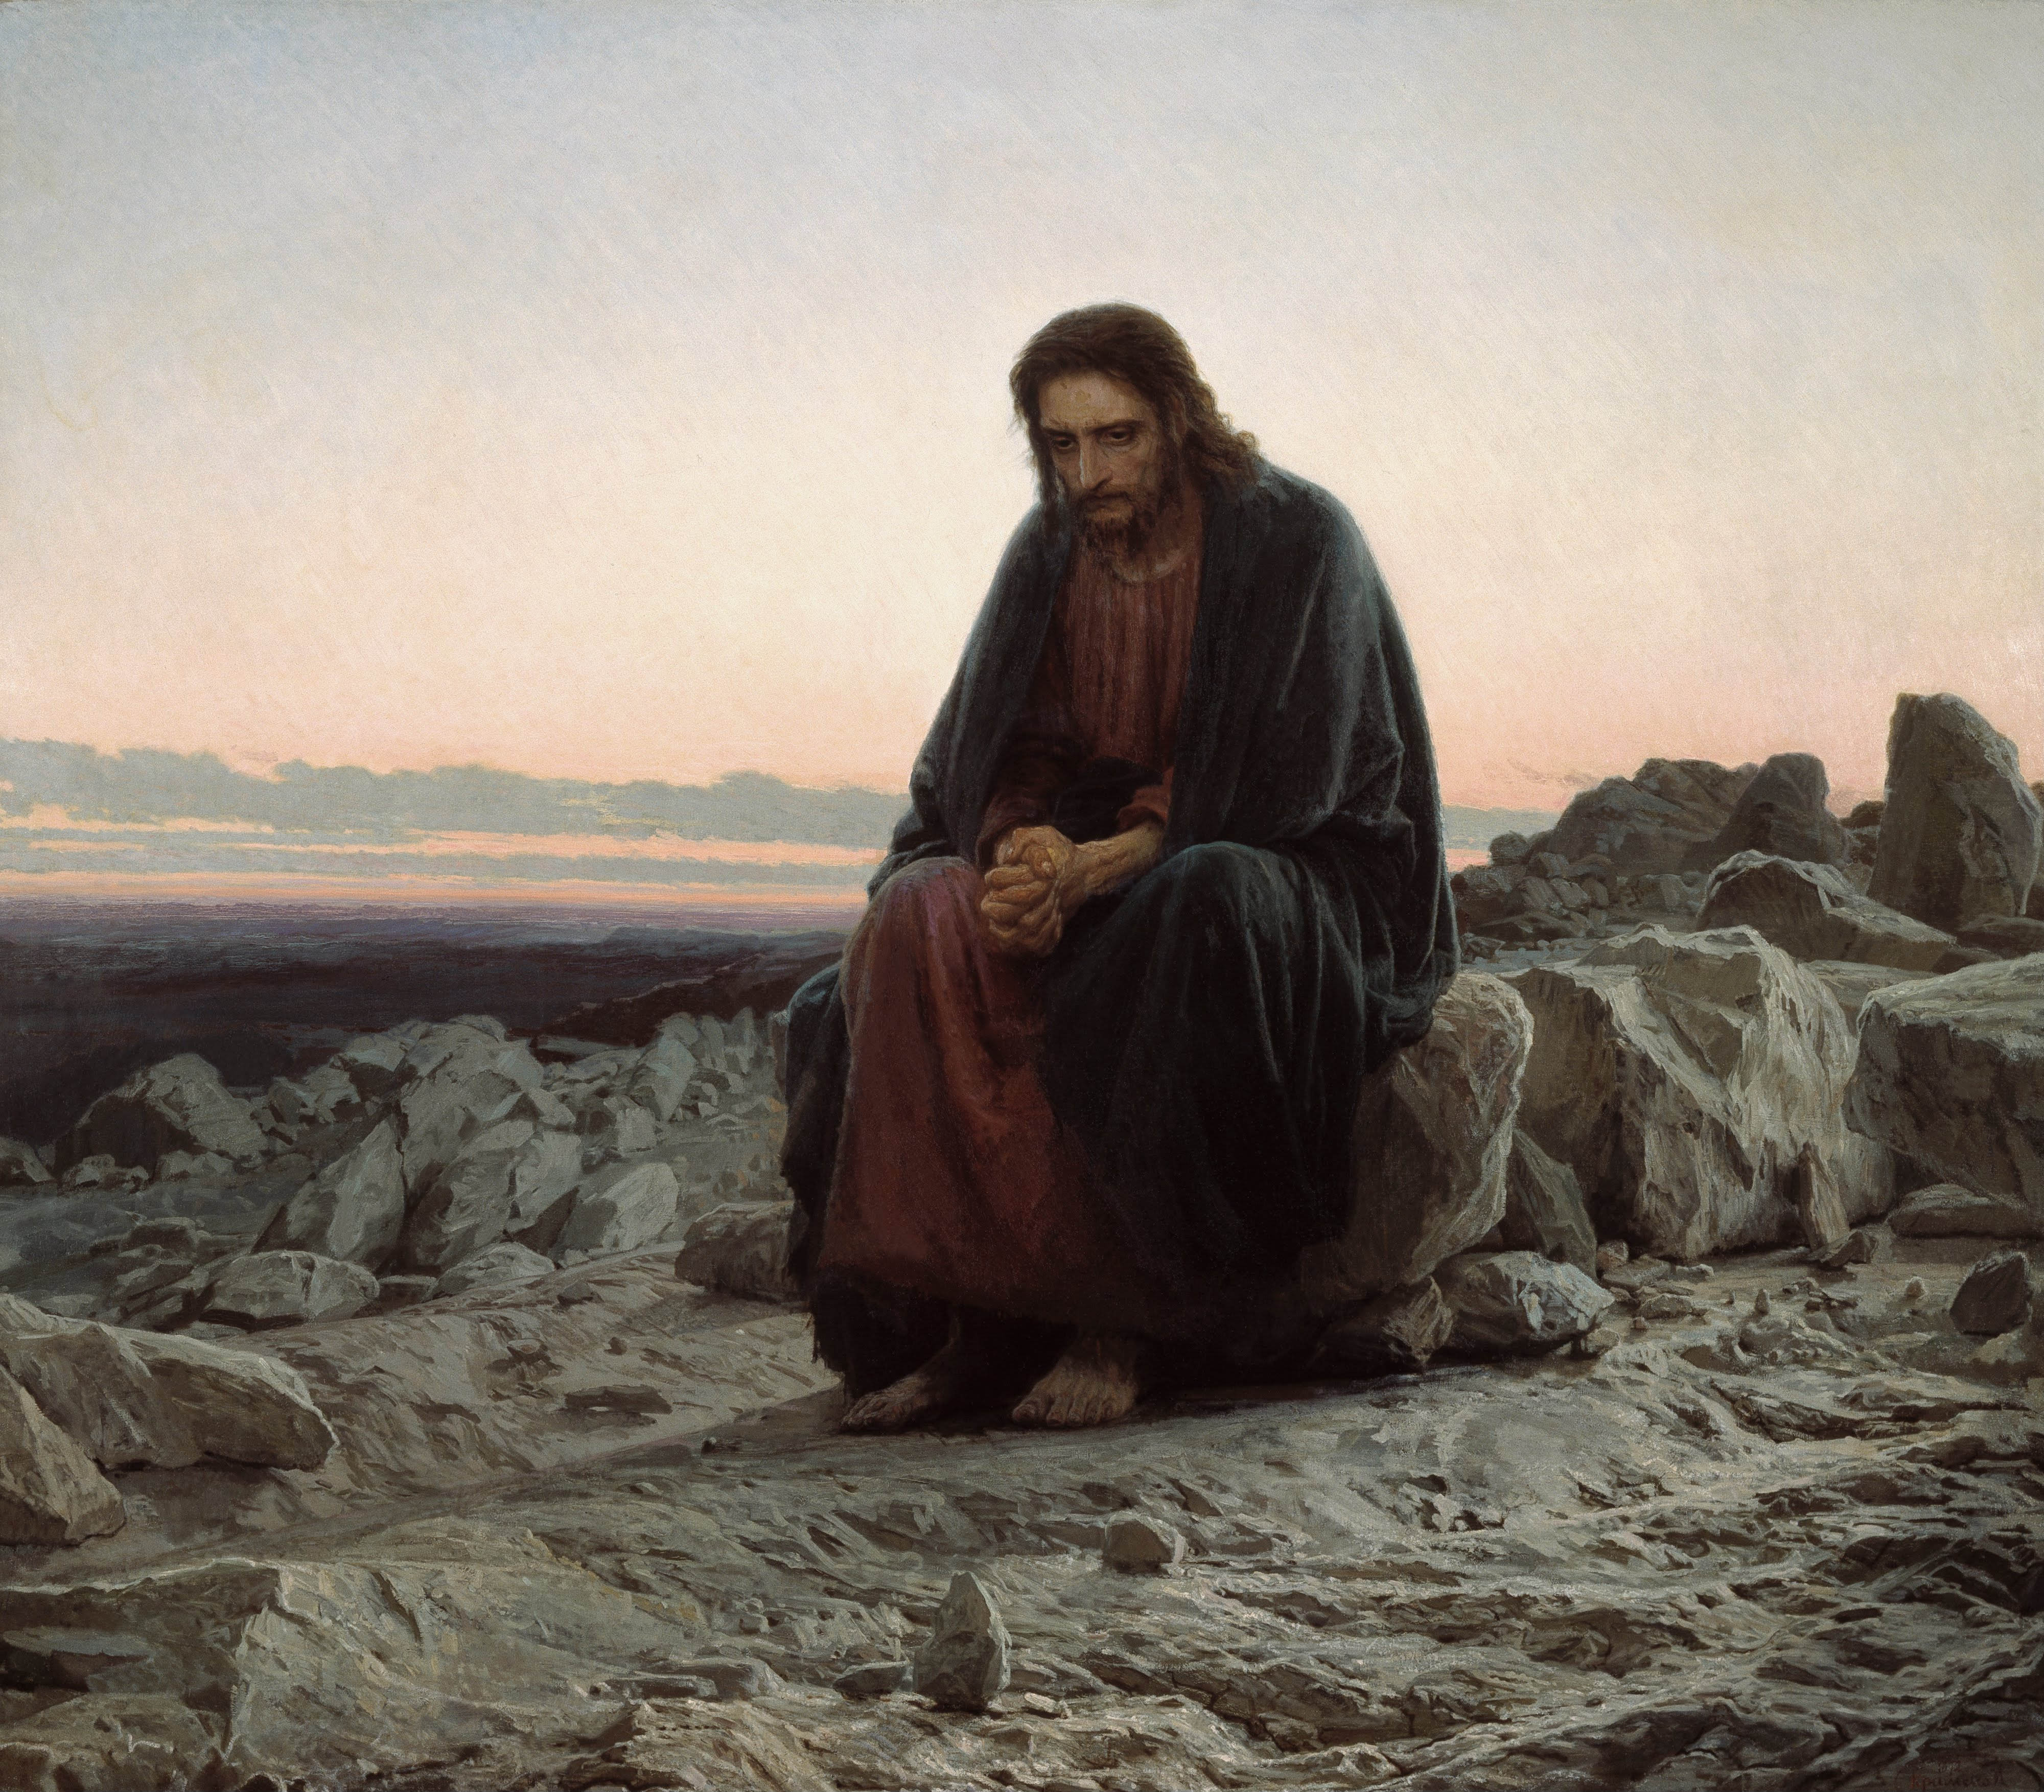 Christ in the Wilderness by Ivan Kramskoi - 1872 - 180 cm x 210 cm Tretyakov Gallery